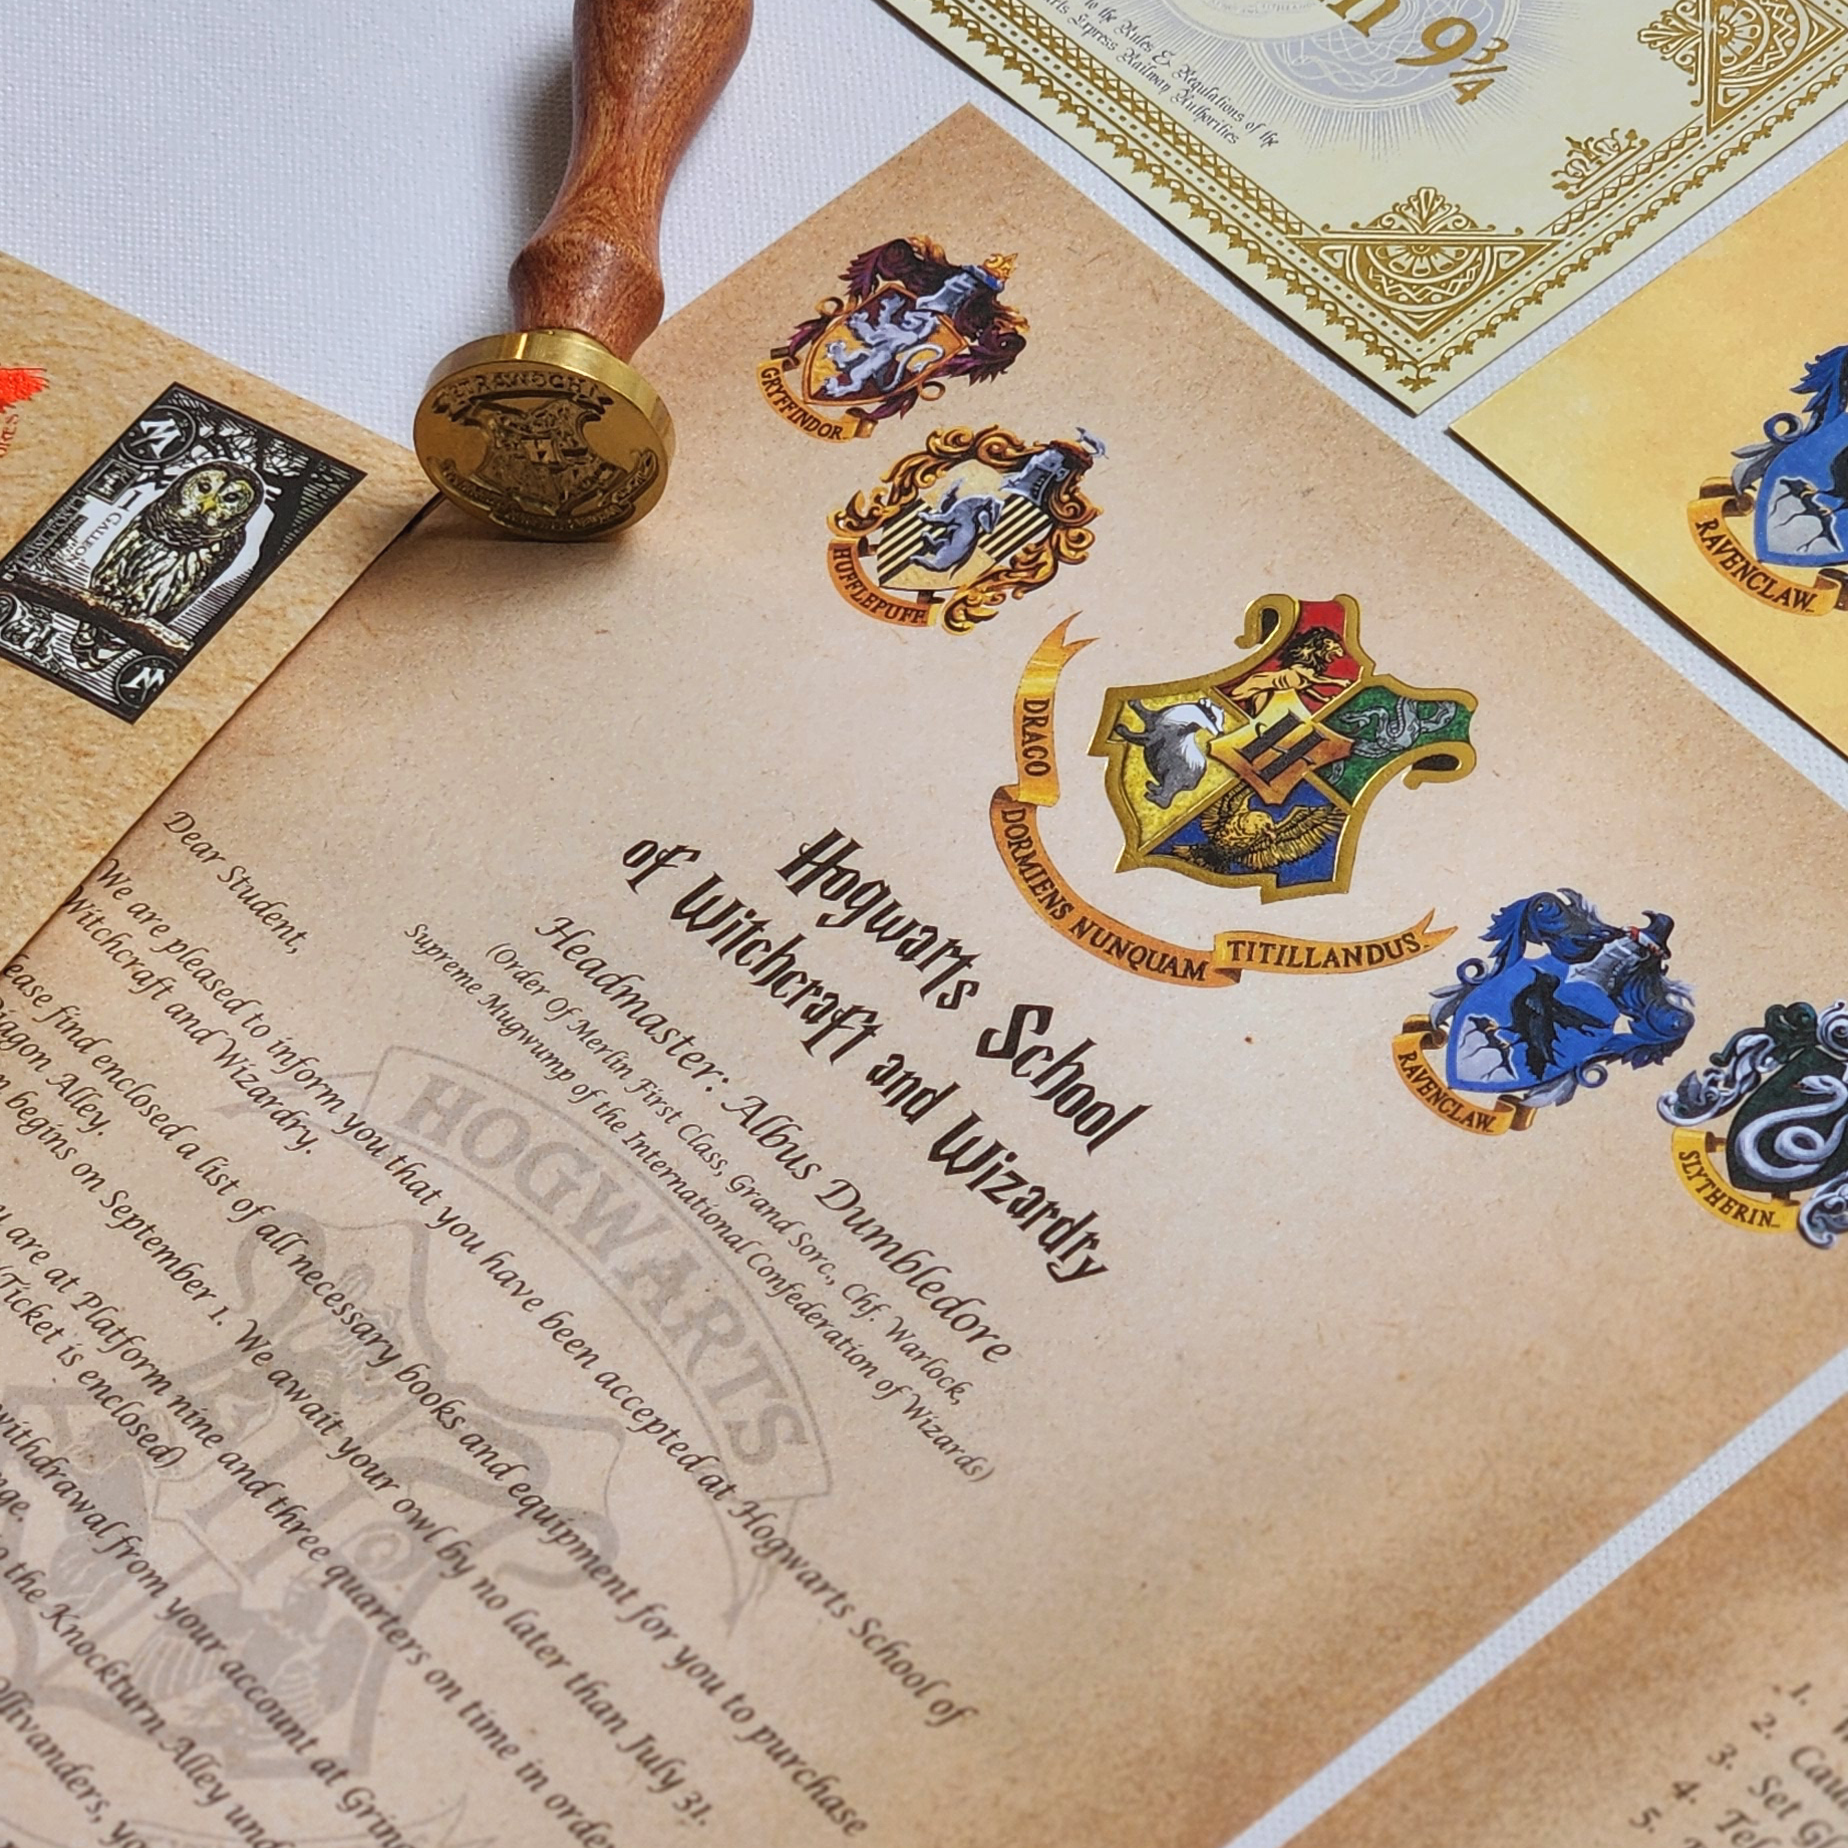 Personalised Harry Potter Hogwarts Acceptance Letter with Hogwarts